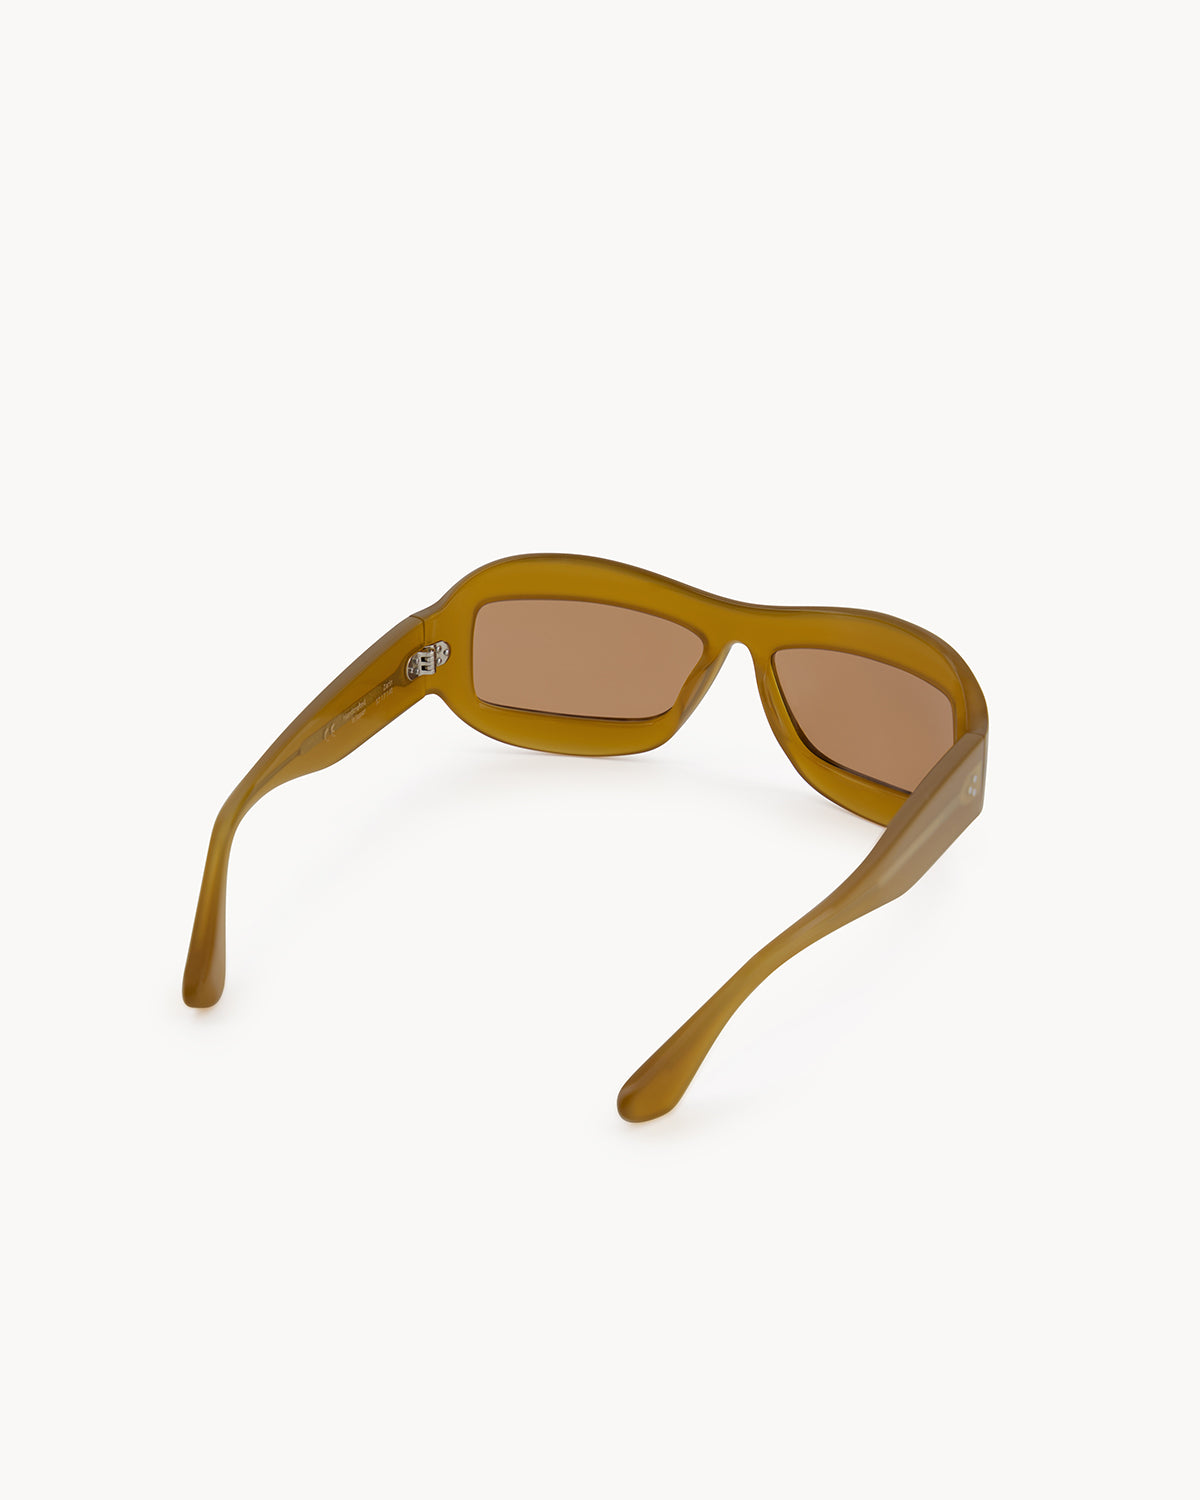 Port Tanger Zarin Sunglasses in Yellow Ochra Acetate and Tobacco Lenses 3